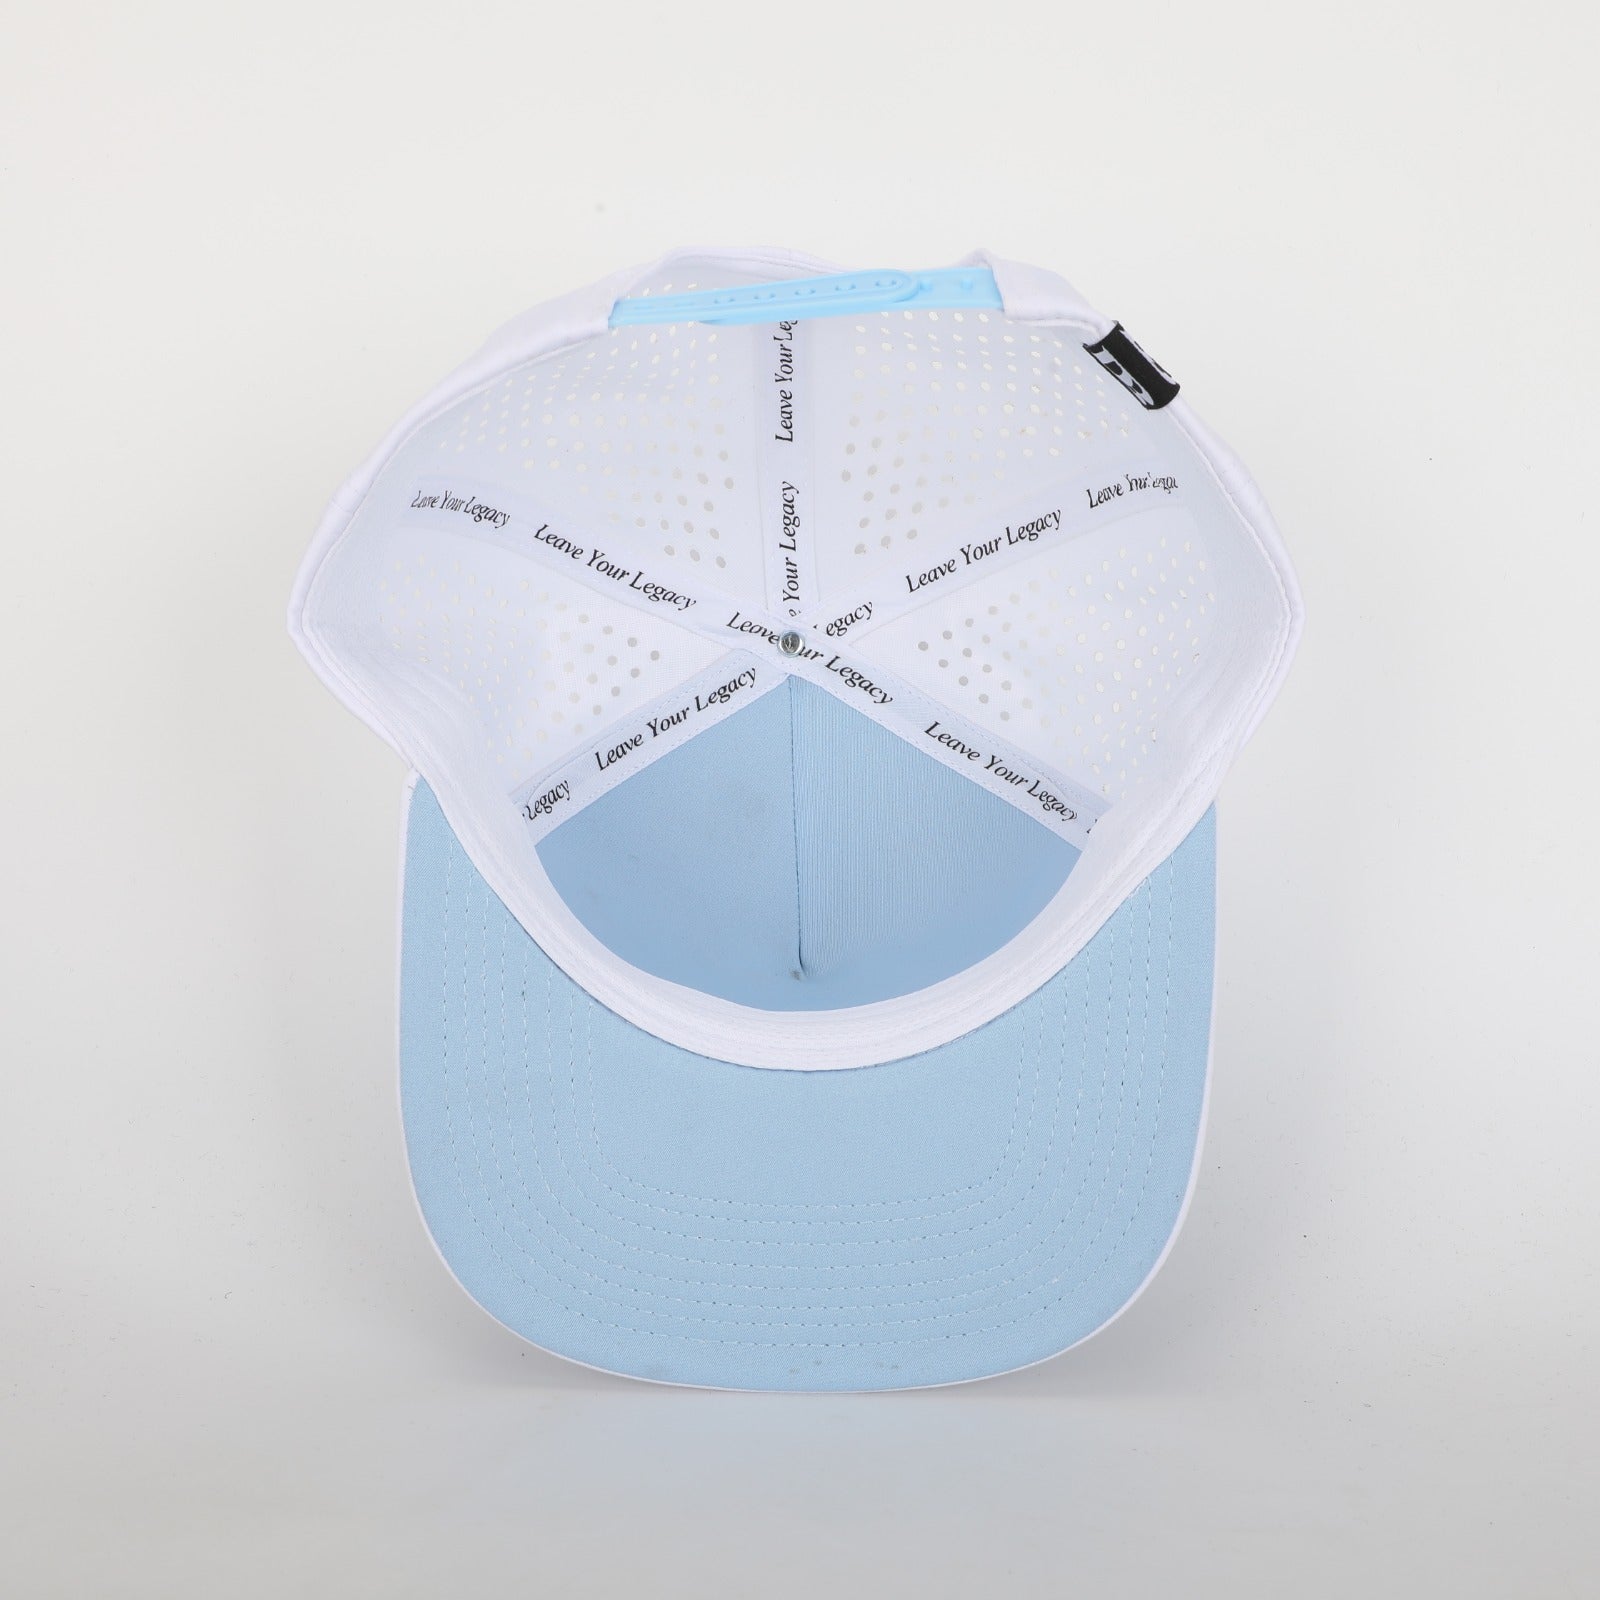 Premium Active 5-Panel Logo Hat (Blue Camo)